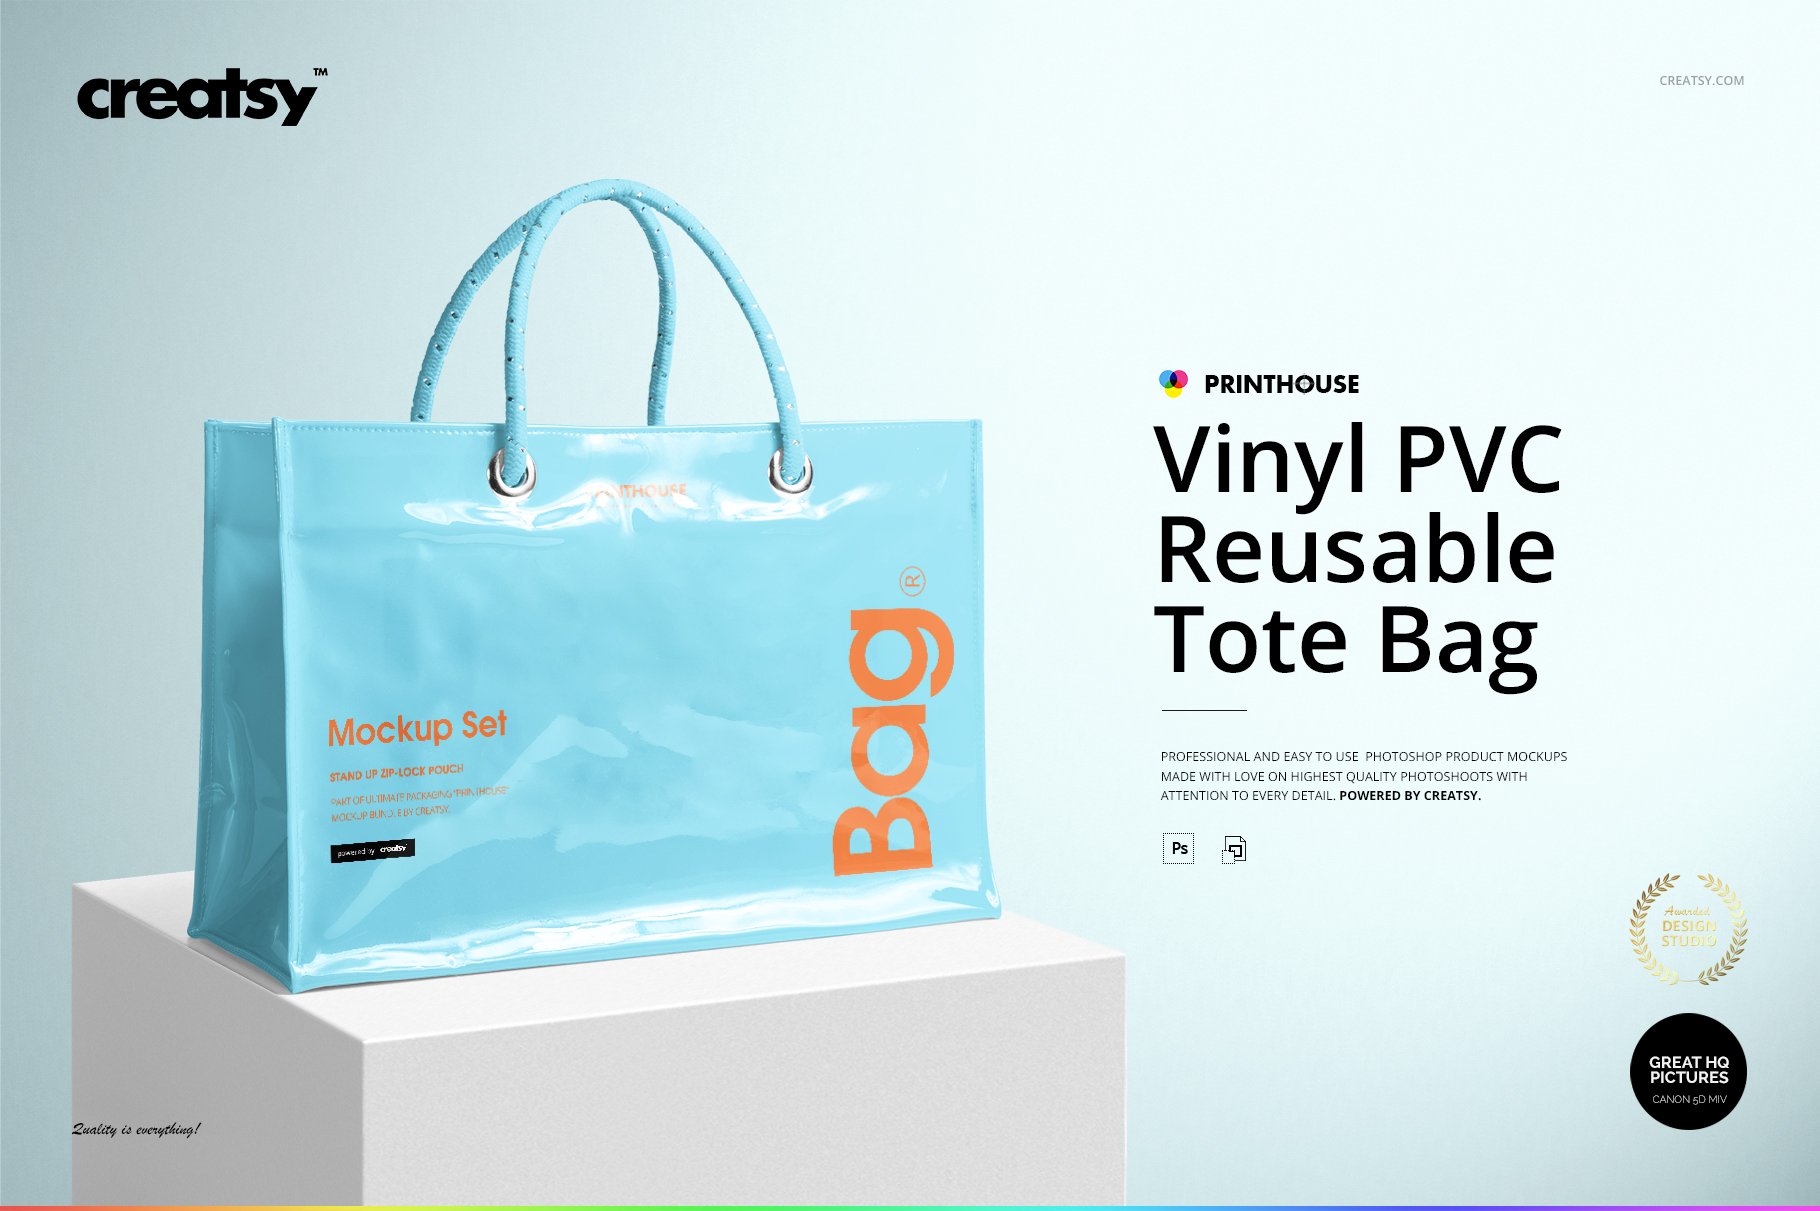 Vinyl PVC Reusable Tote Bag Mockups cover image.